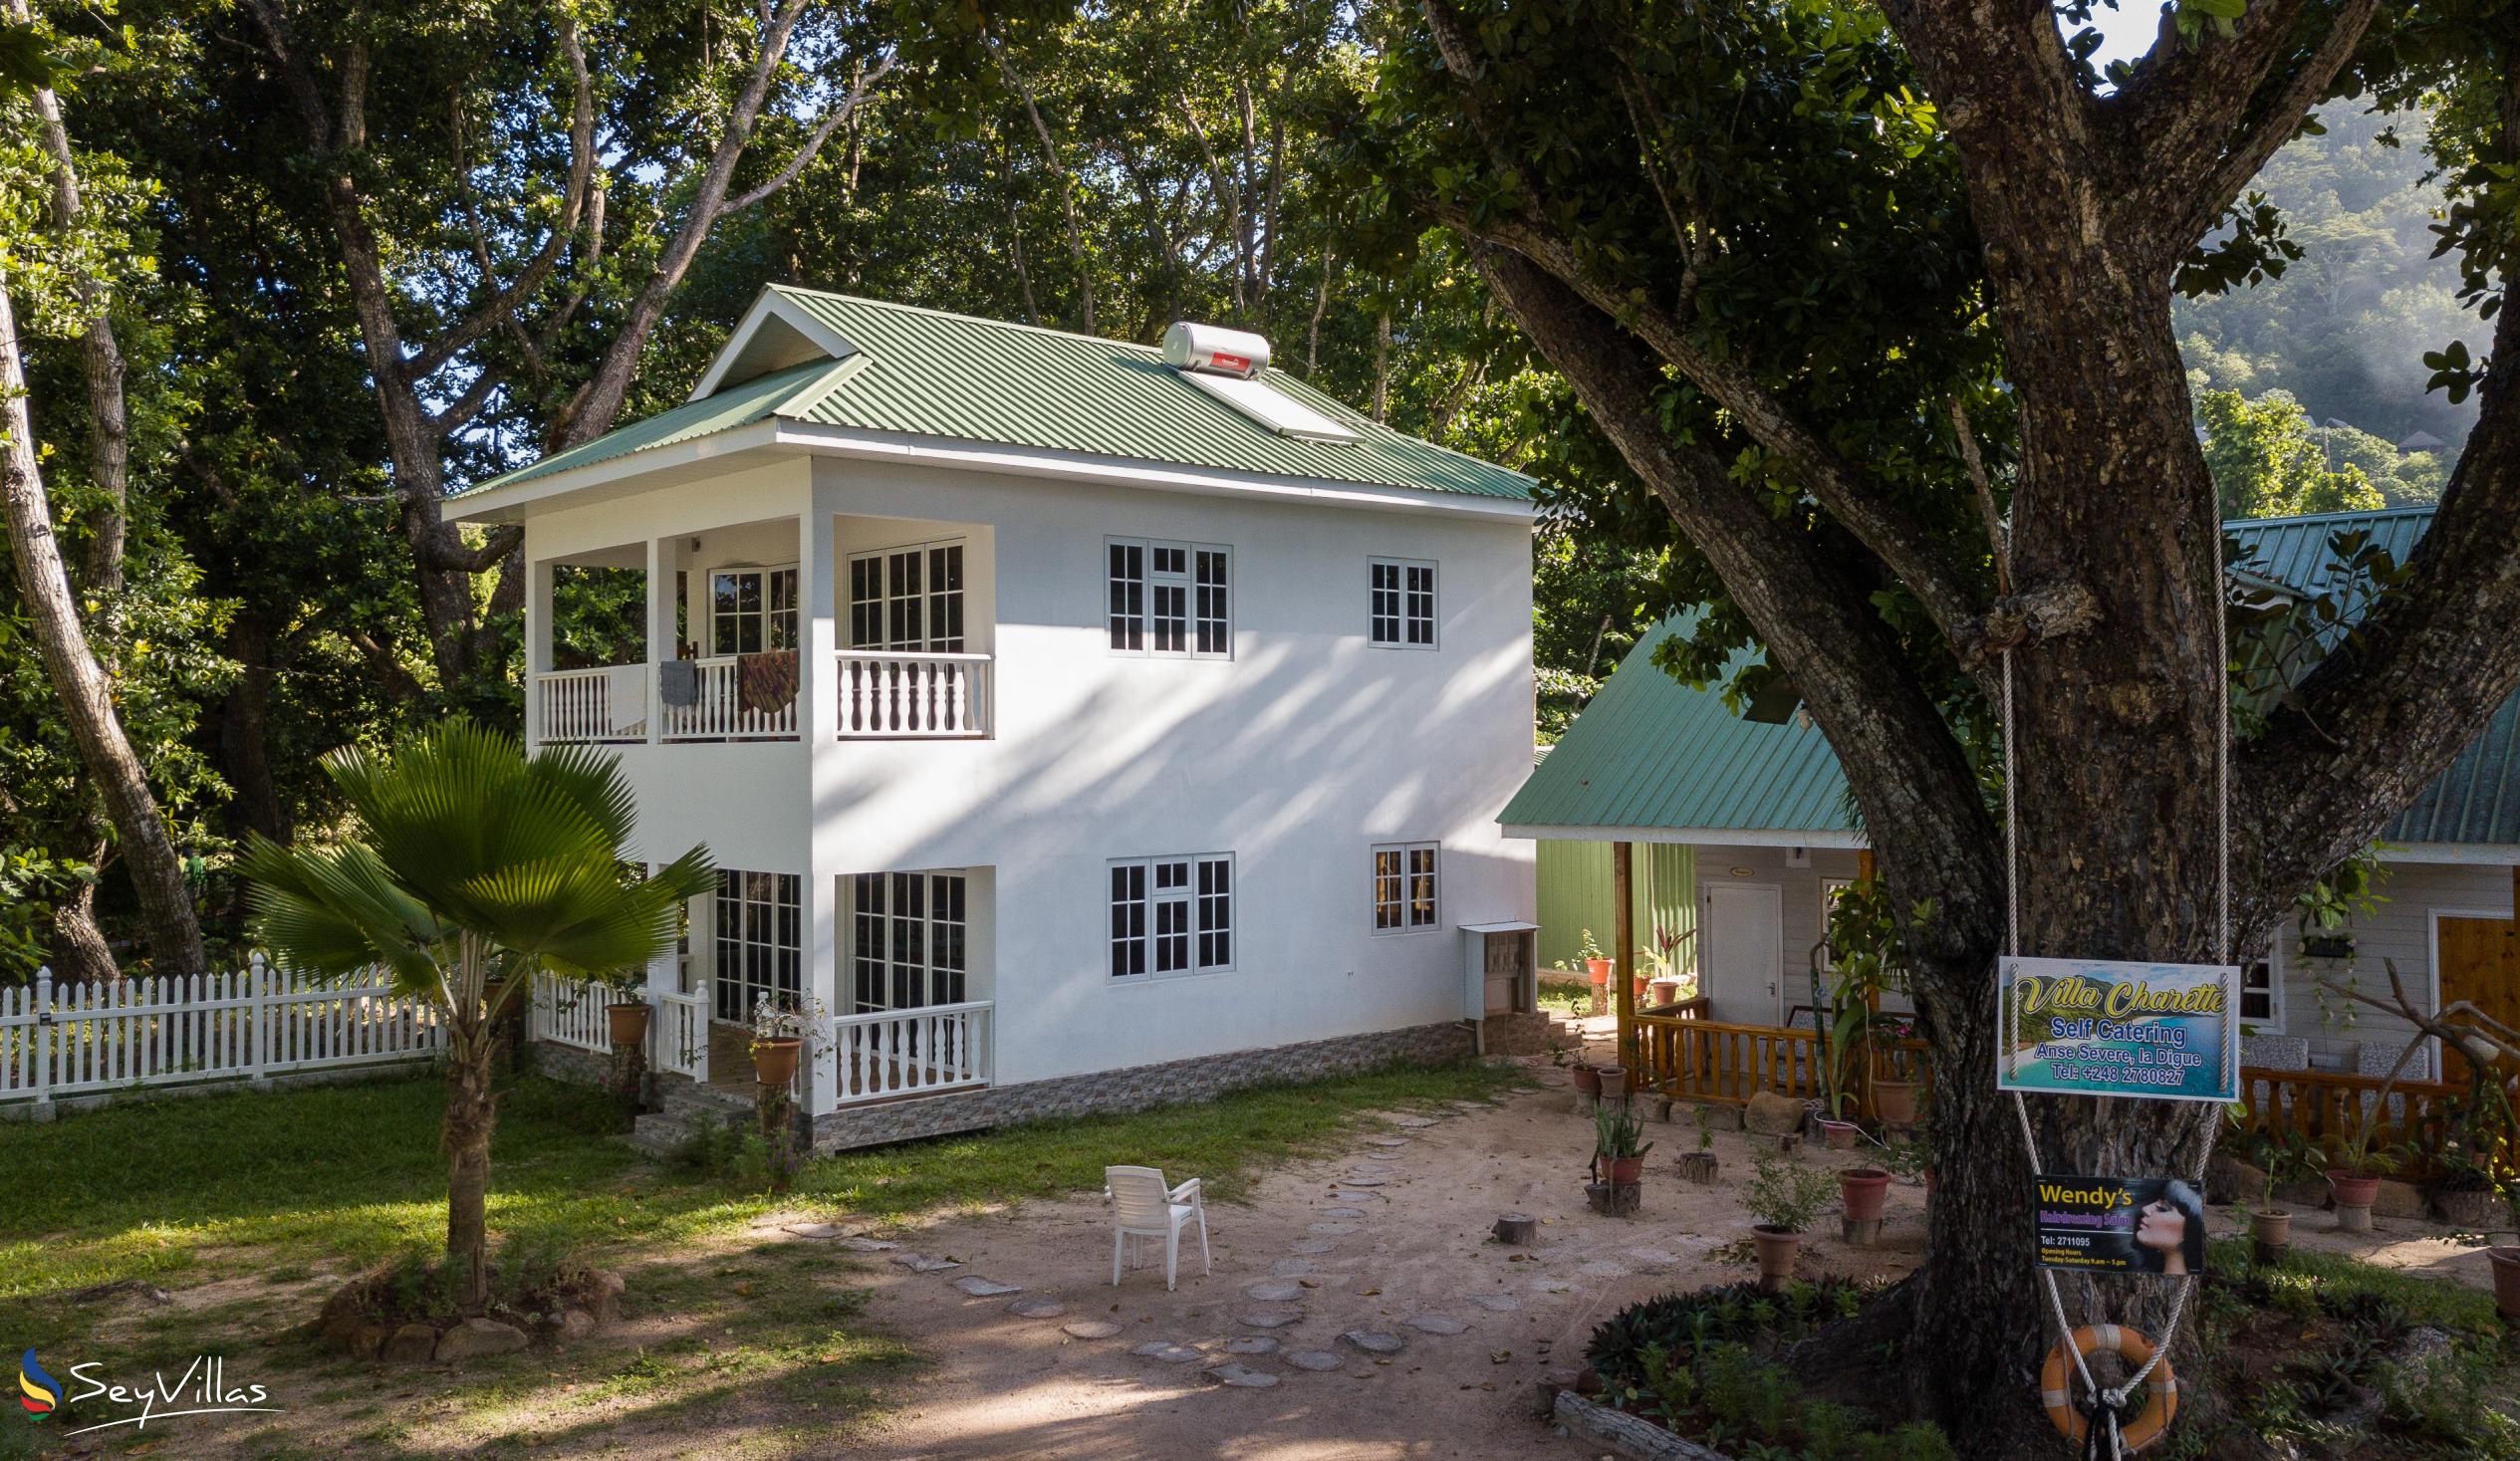 Foto 3: Villa Charette - Aussenbereich - La Digue (Seychellen)